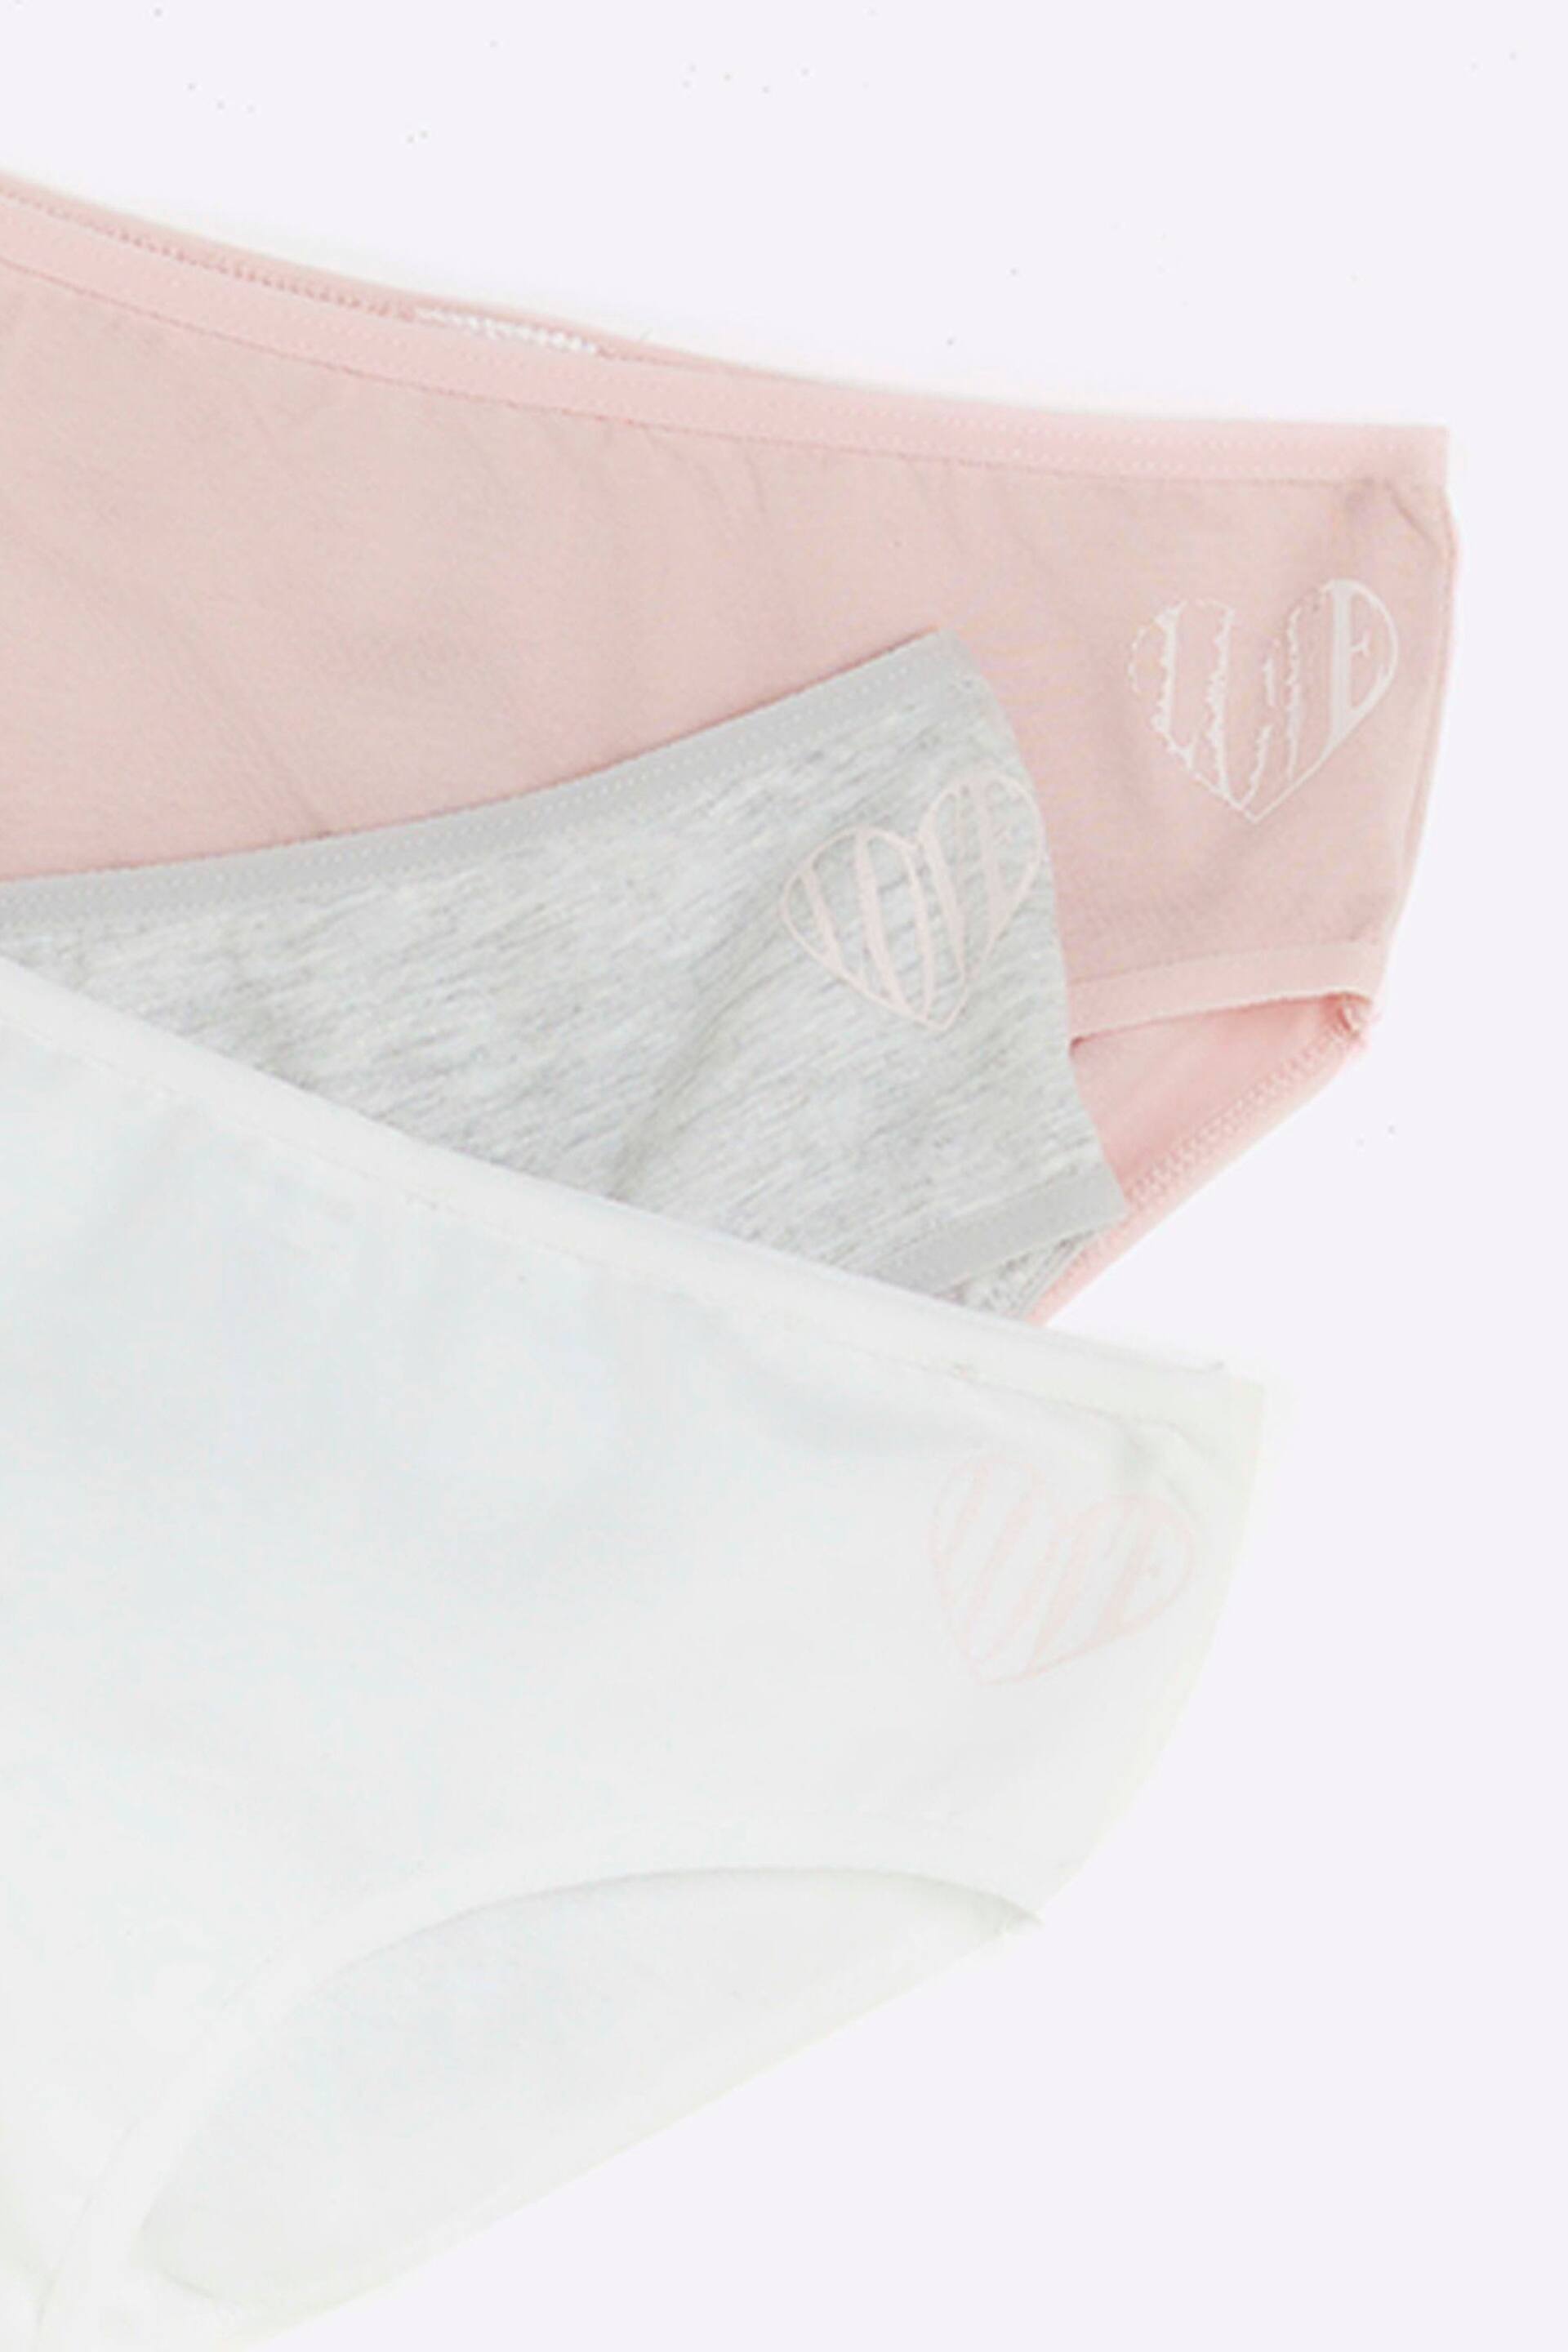 River Island Pink Girls Underwear Vests And Briefs 4 Piece Set - Image 4 of 4